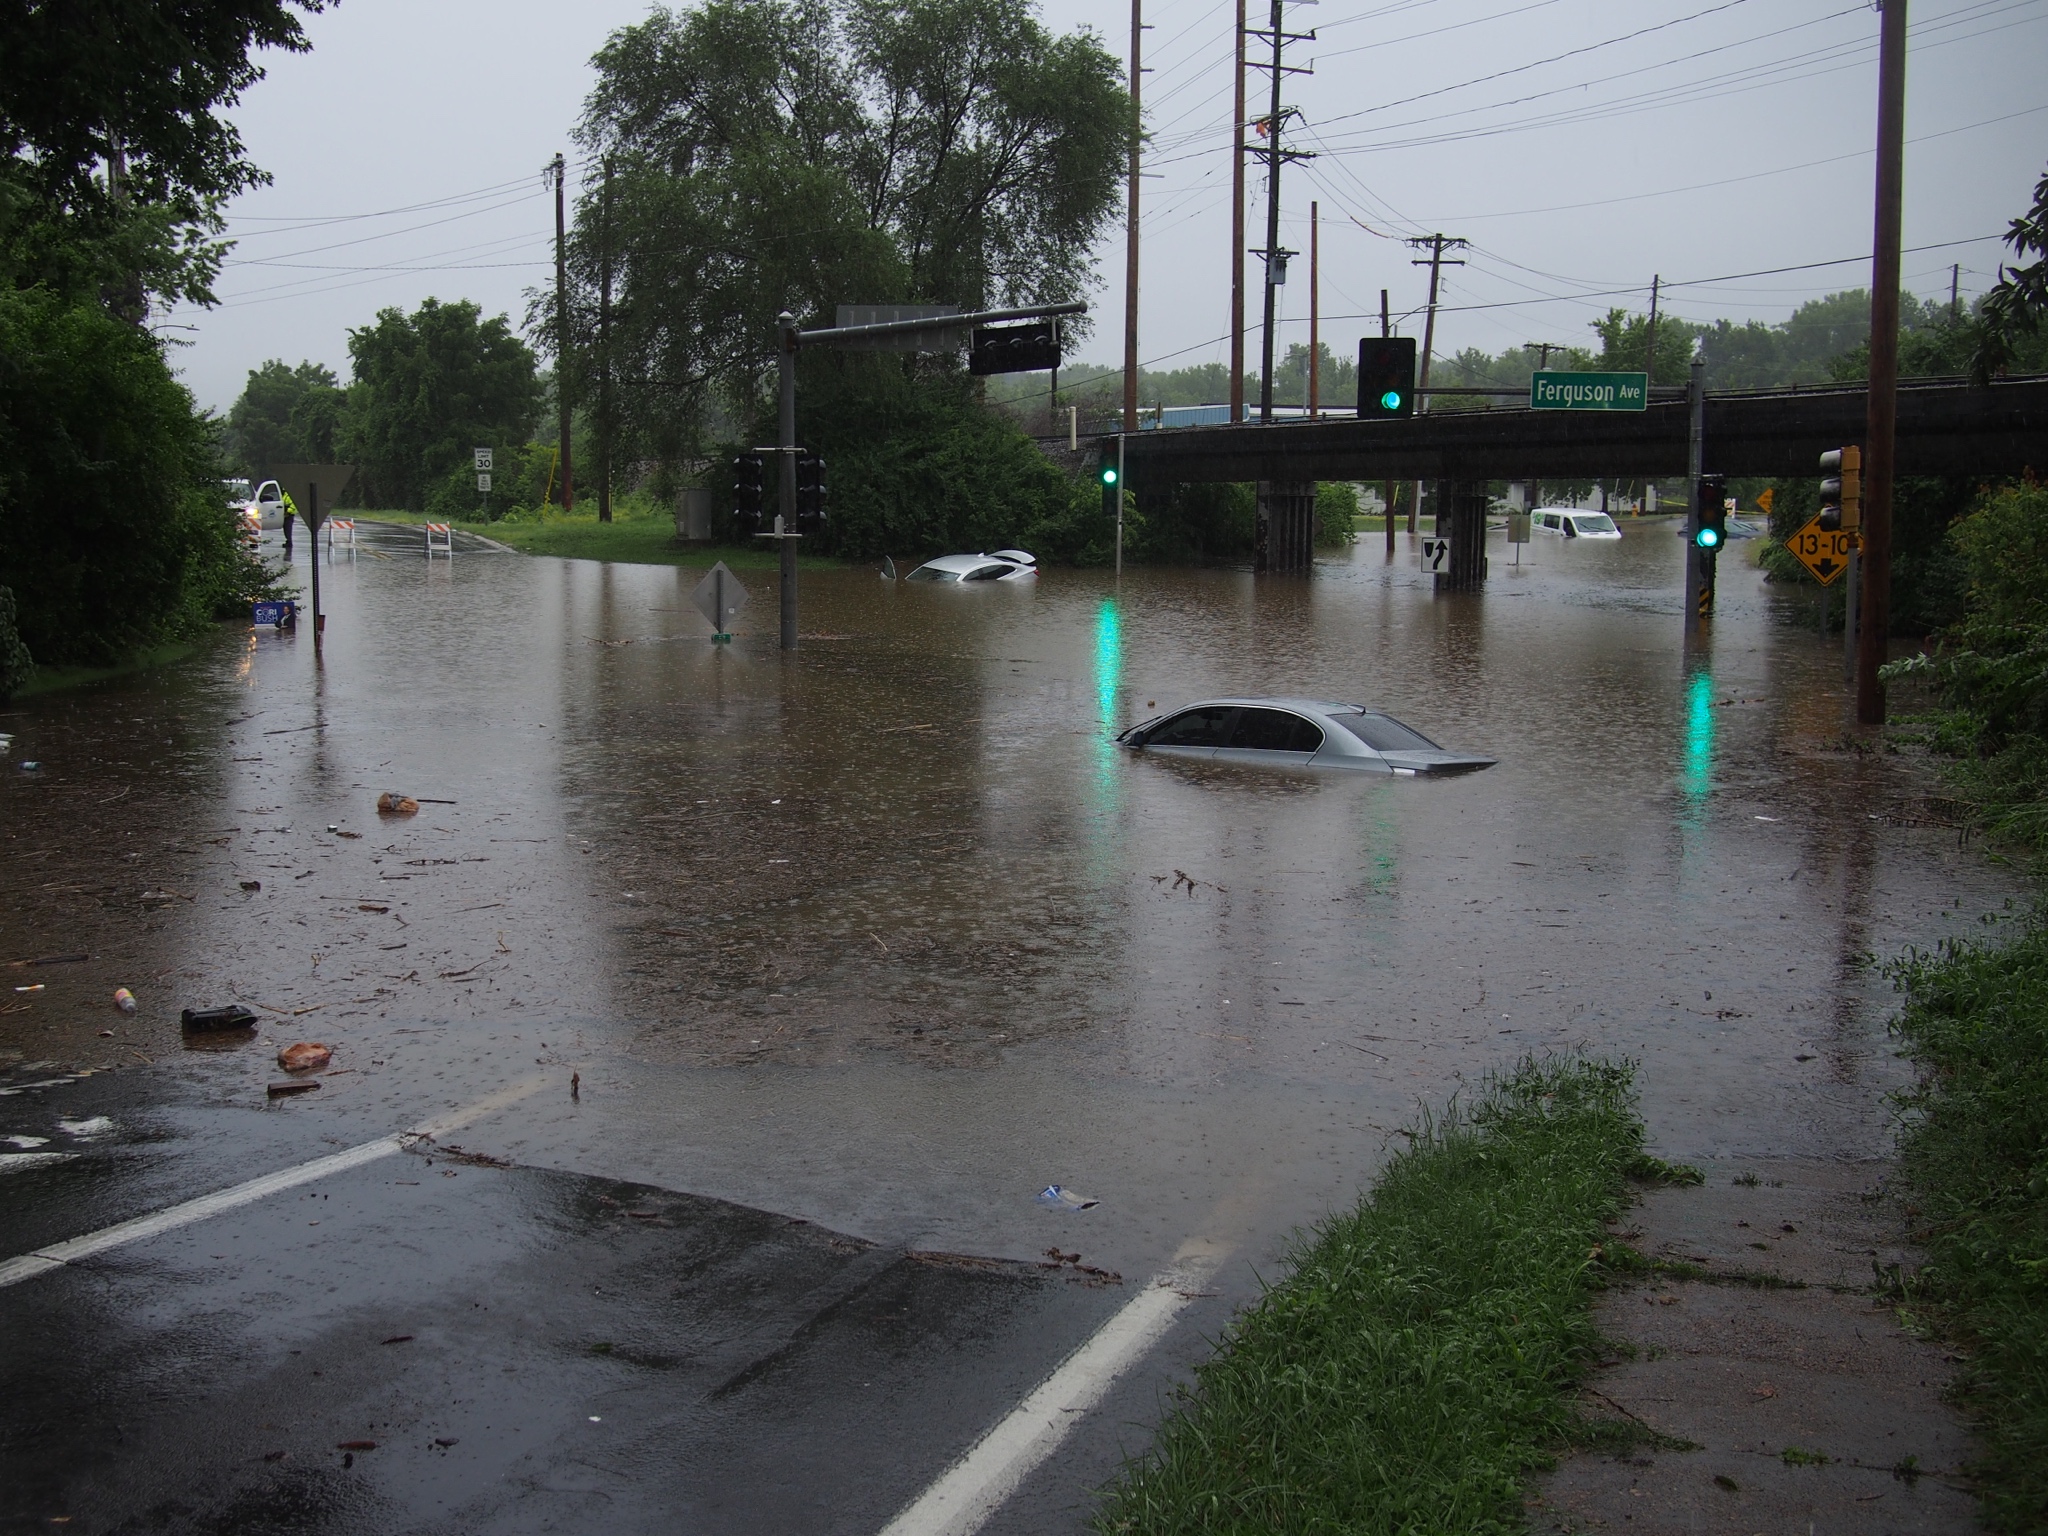 Flooding on South Elizabeth and Ferguson Avenue in Ferguson, MO